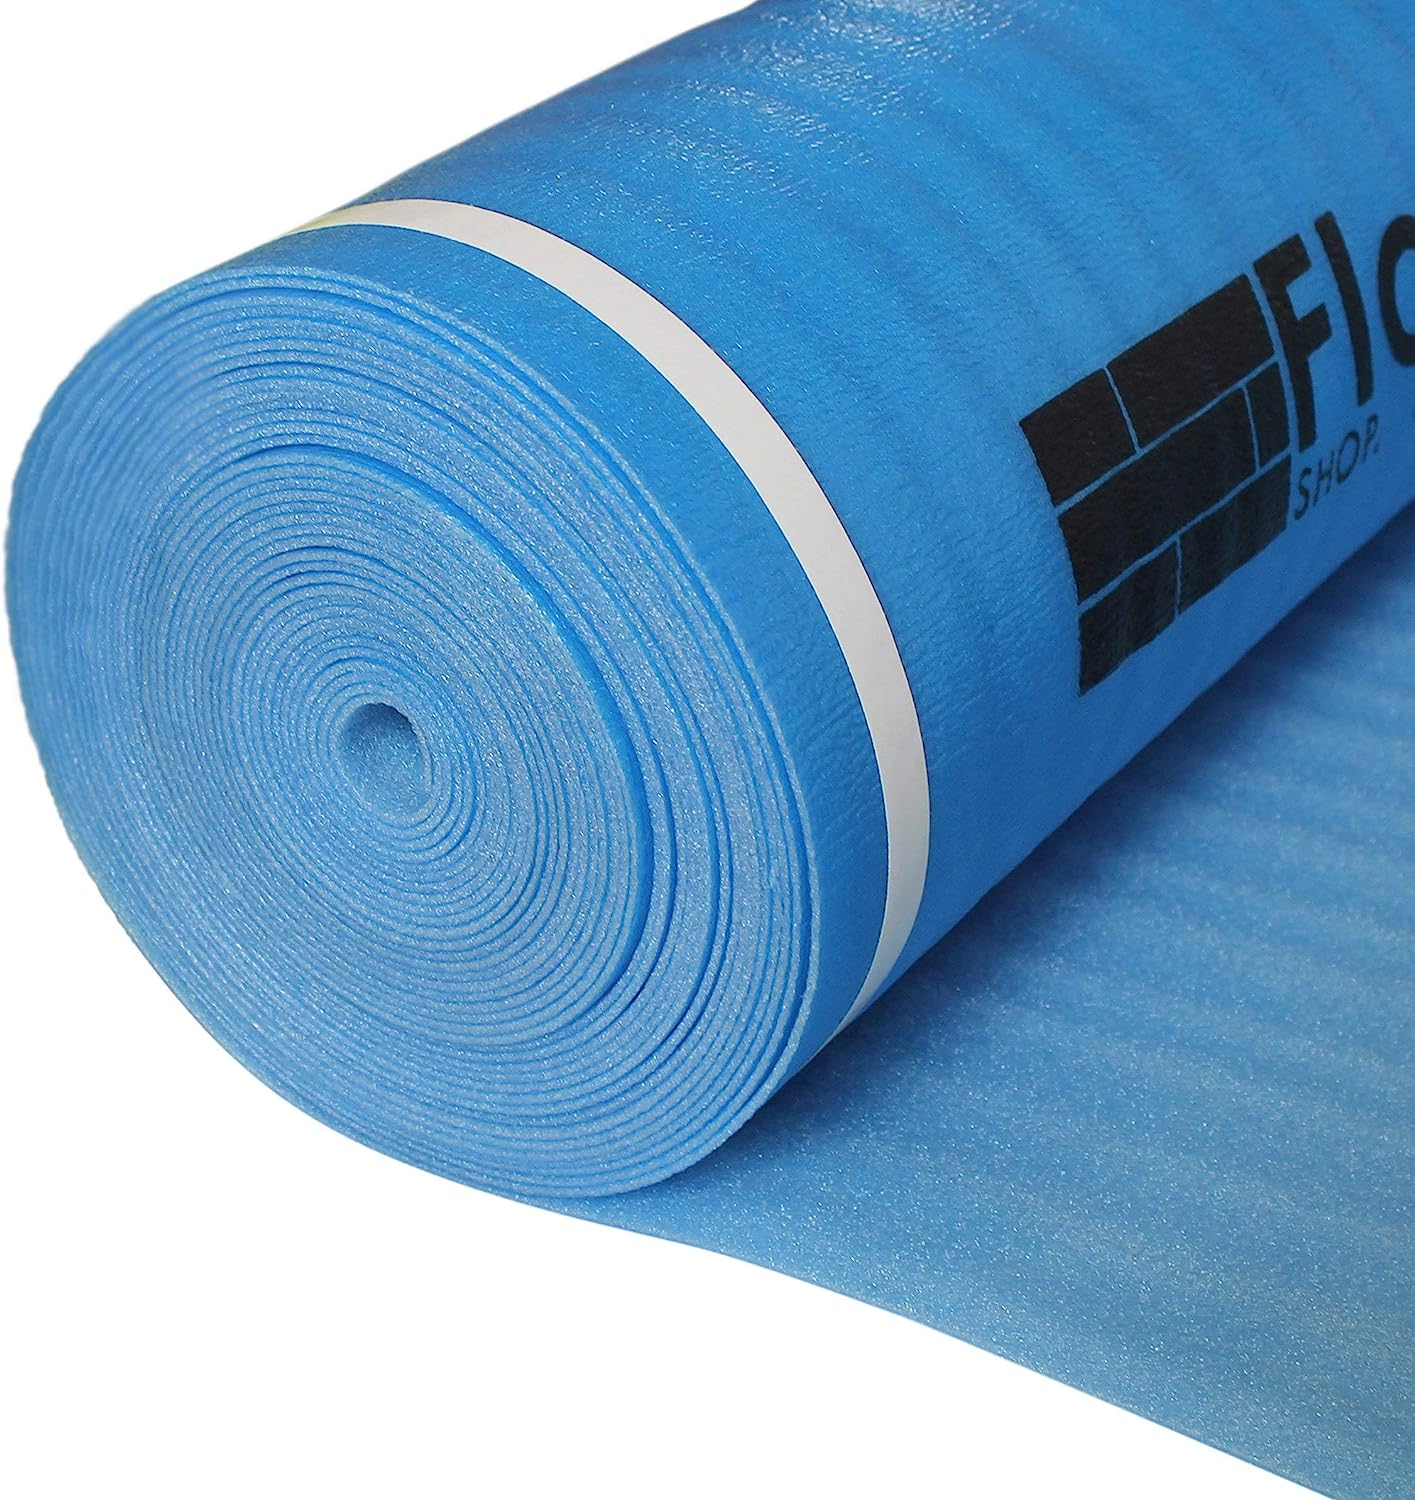 Floorlot Blue Flooring Underlayment with Moisture [...]